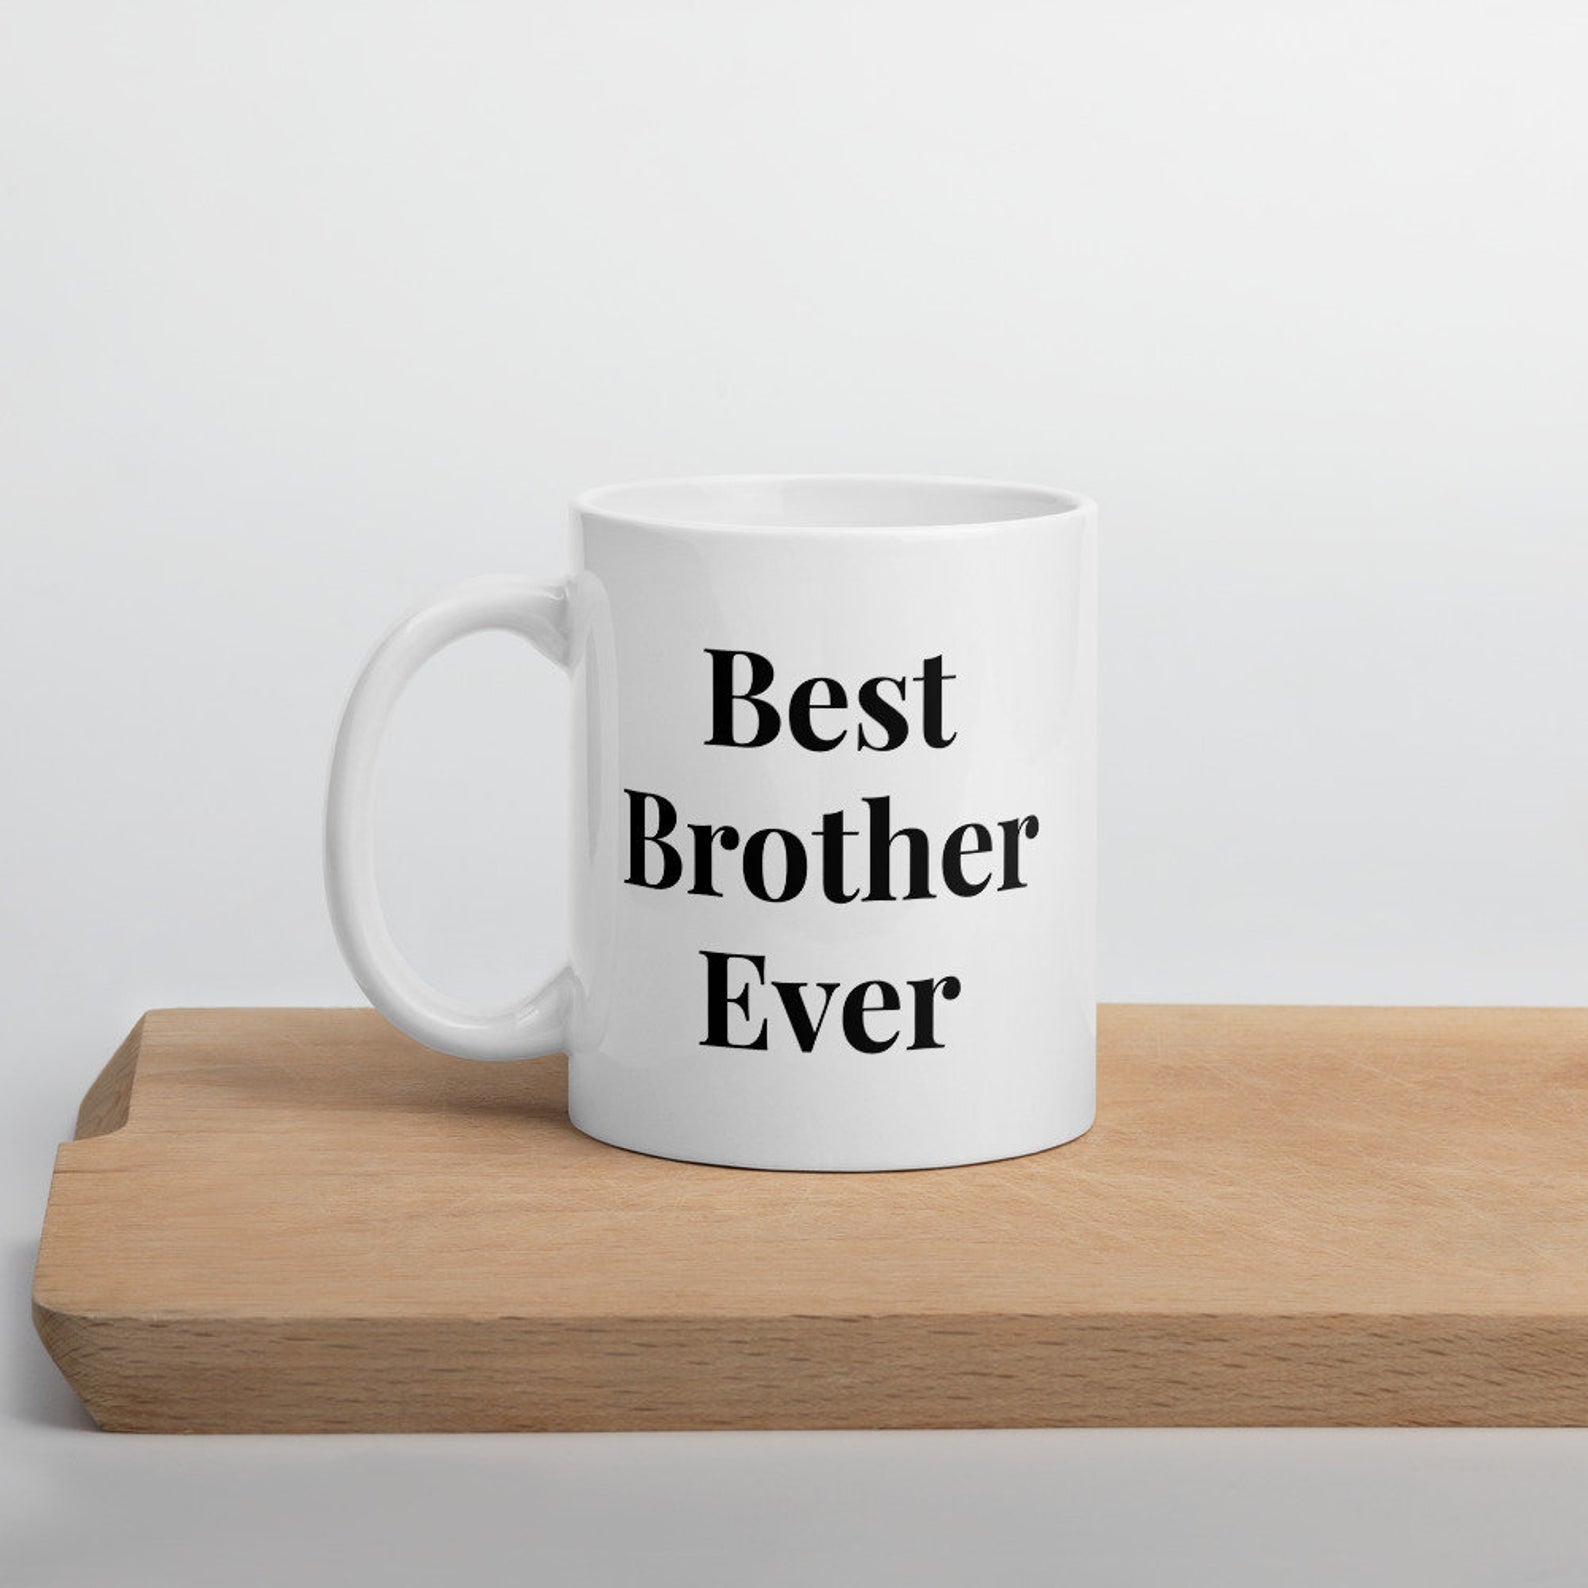 Best Brother Ever Mug White Ceramic 11-15Oz Coffee Tea Cup